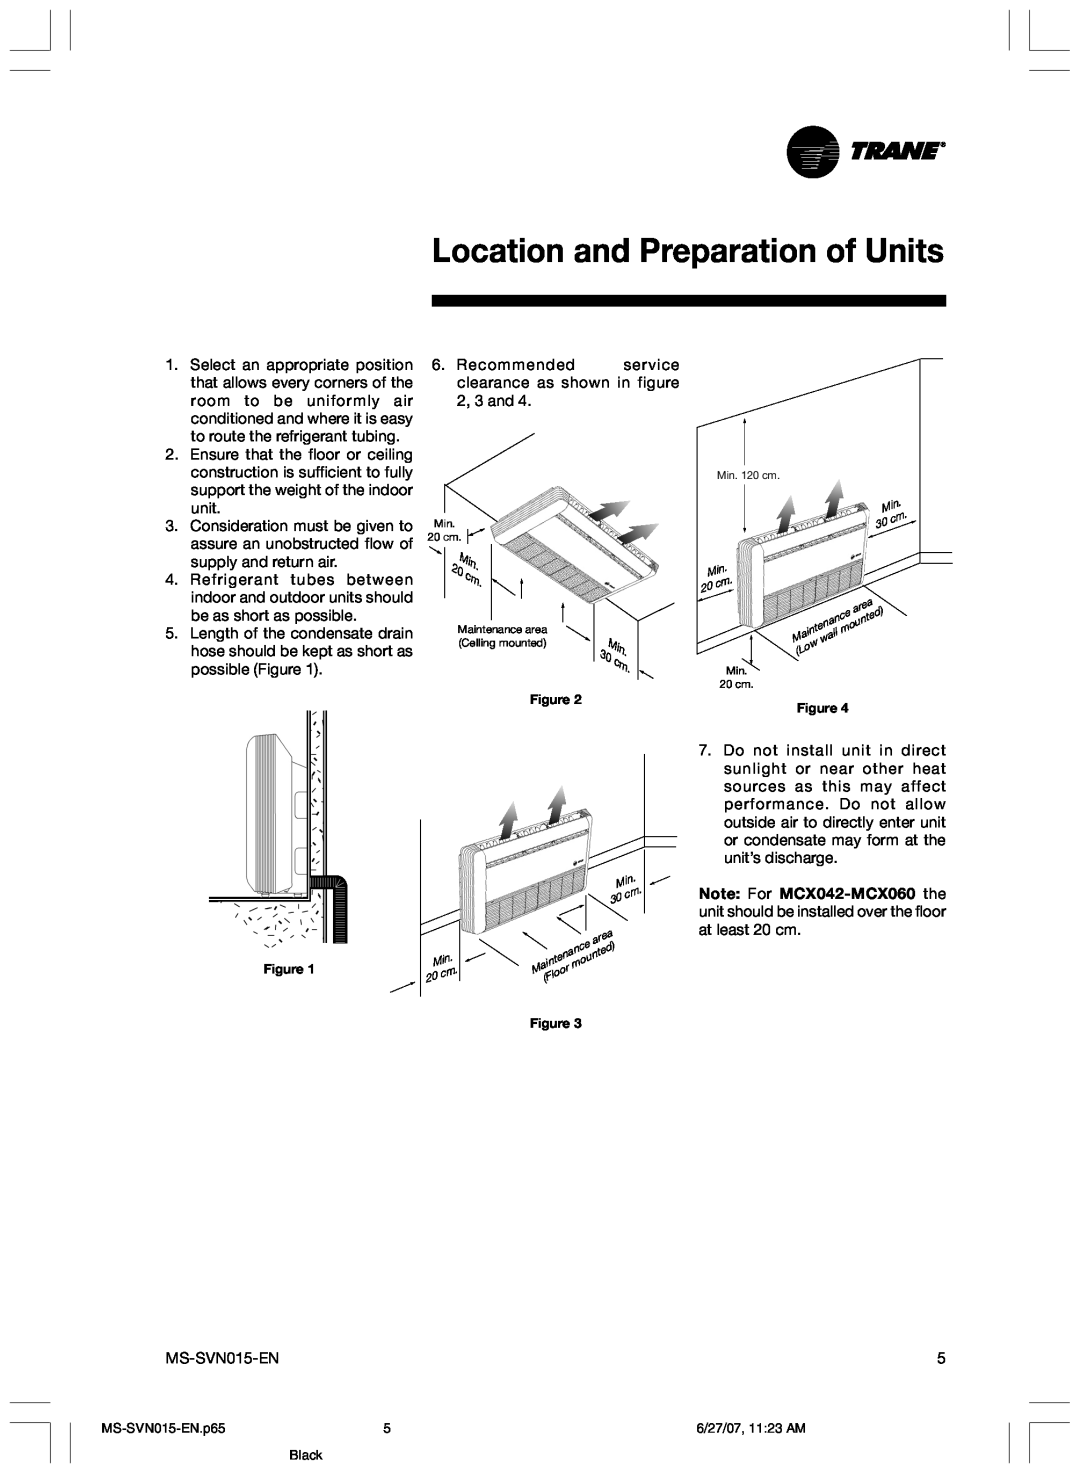 Trane MS-SVN015-EN installation manual Location and Preparation of Units 